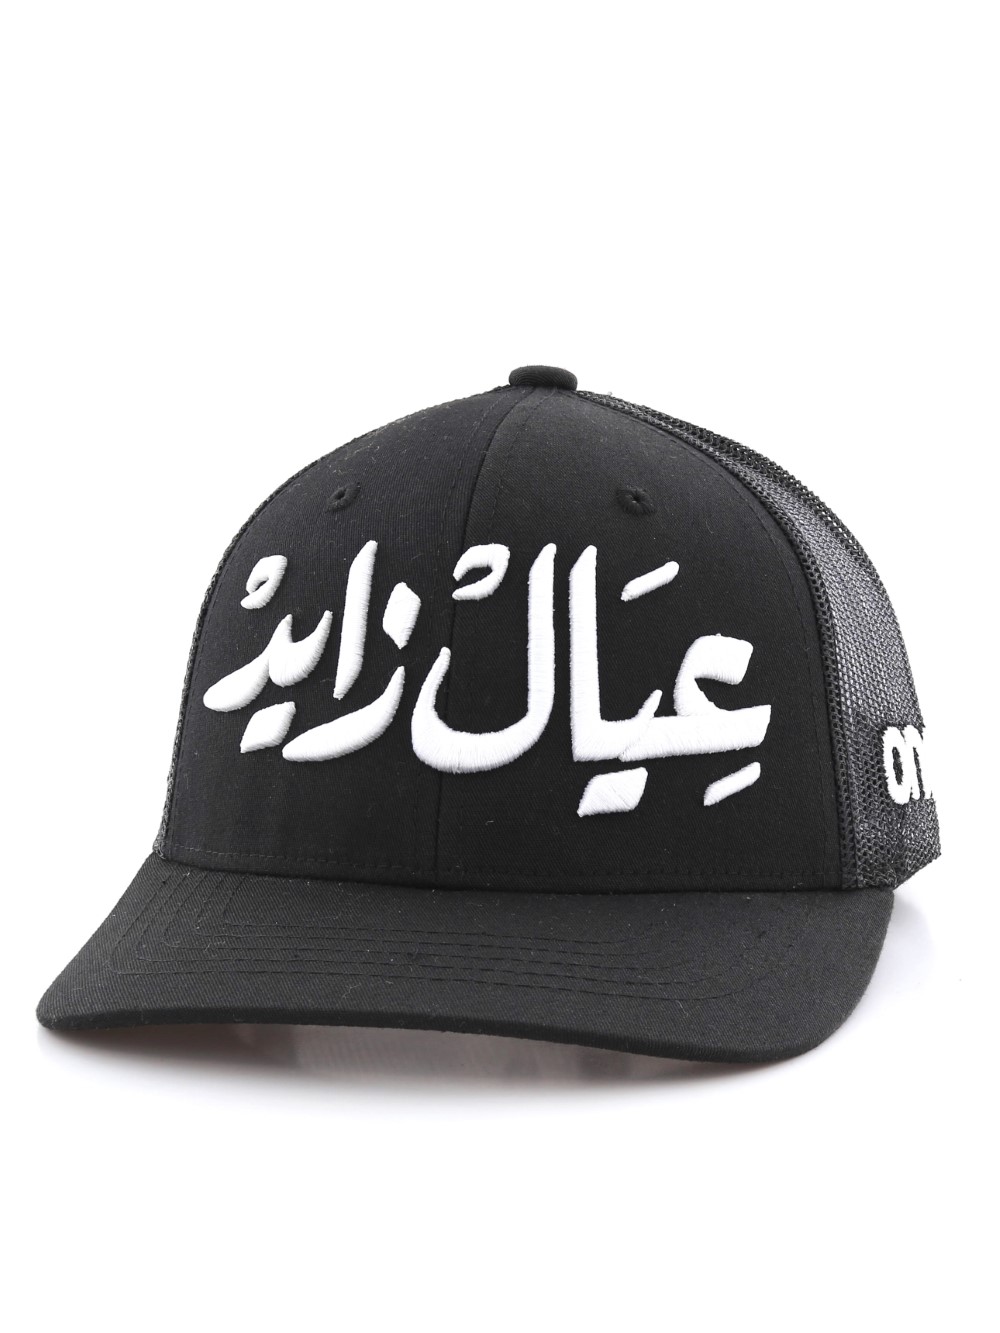 One8 3Yal Zayed Calligraphy Curved Brim Trucker Hat Kids Cap Osfa